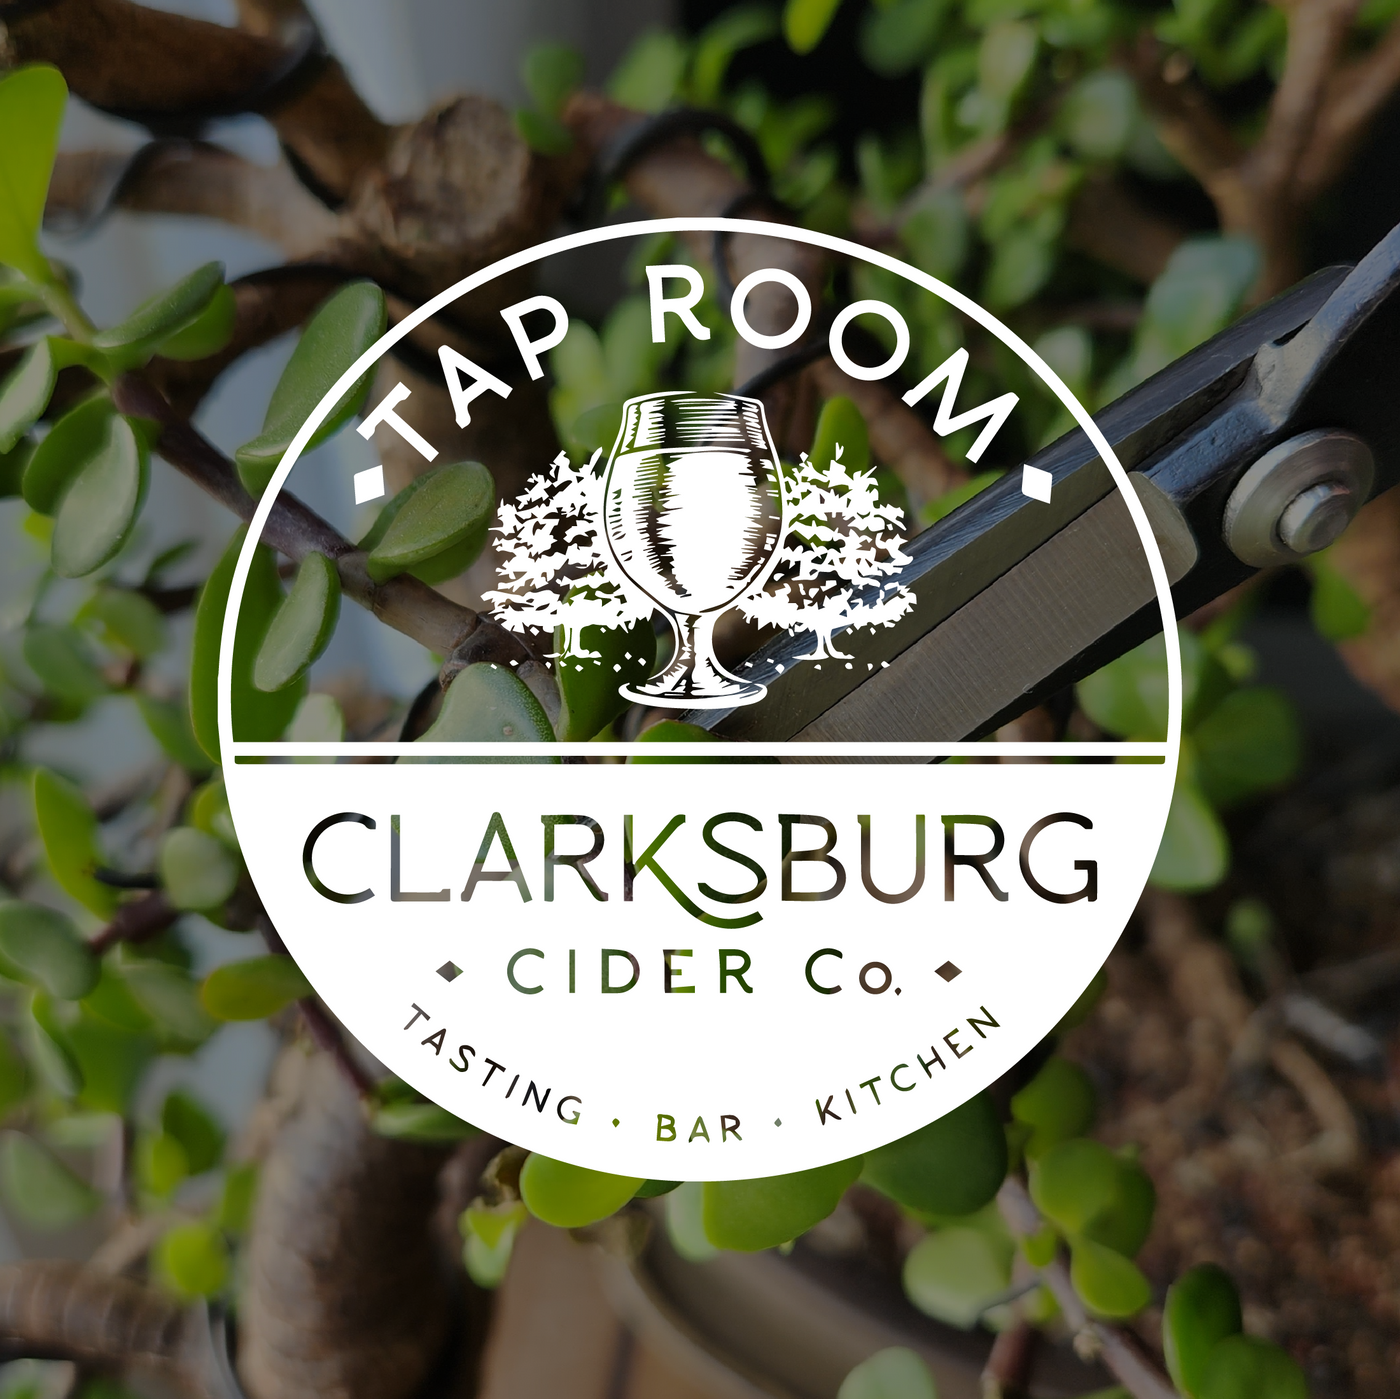 Clarksburg Cider Co.